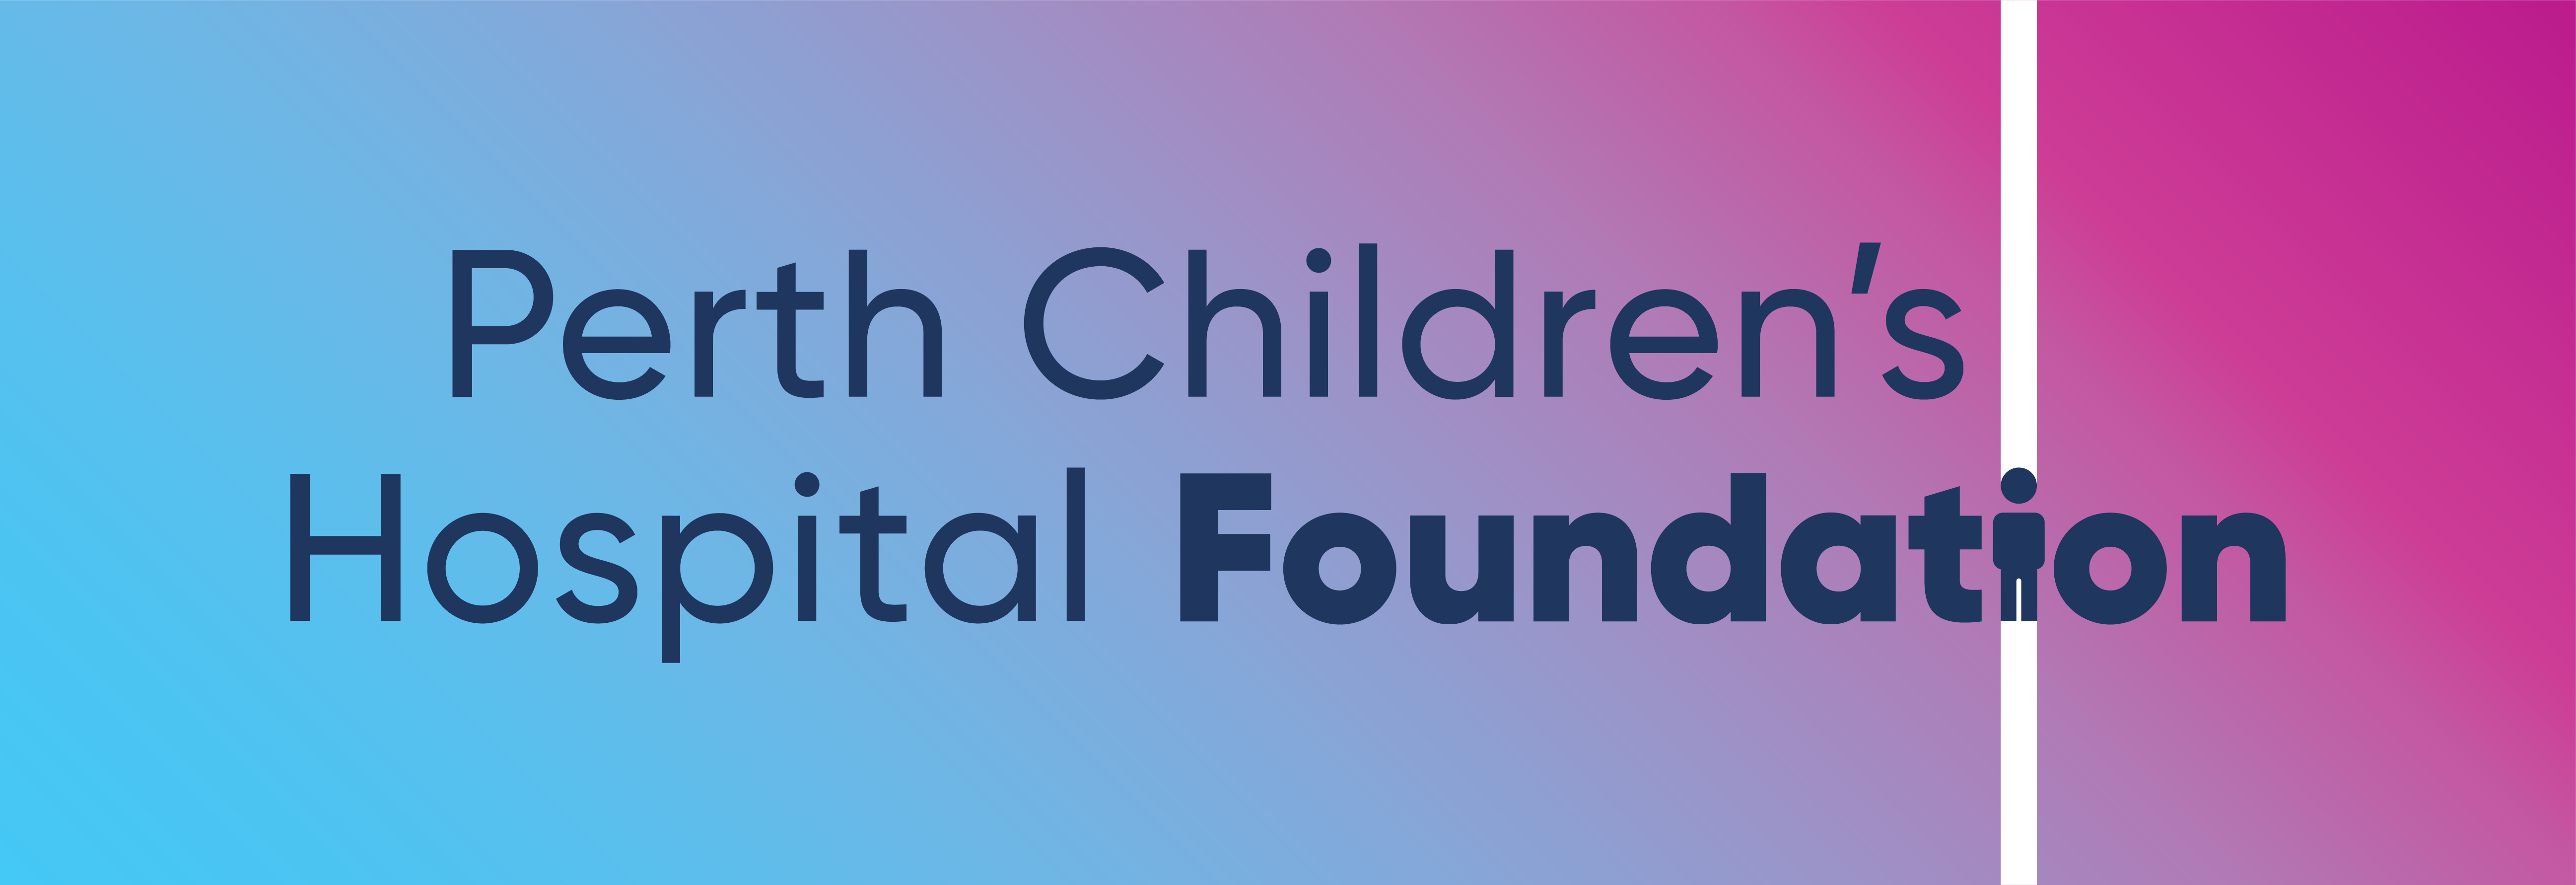 Perth Children's Hospital Foundation logo